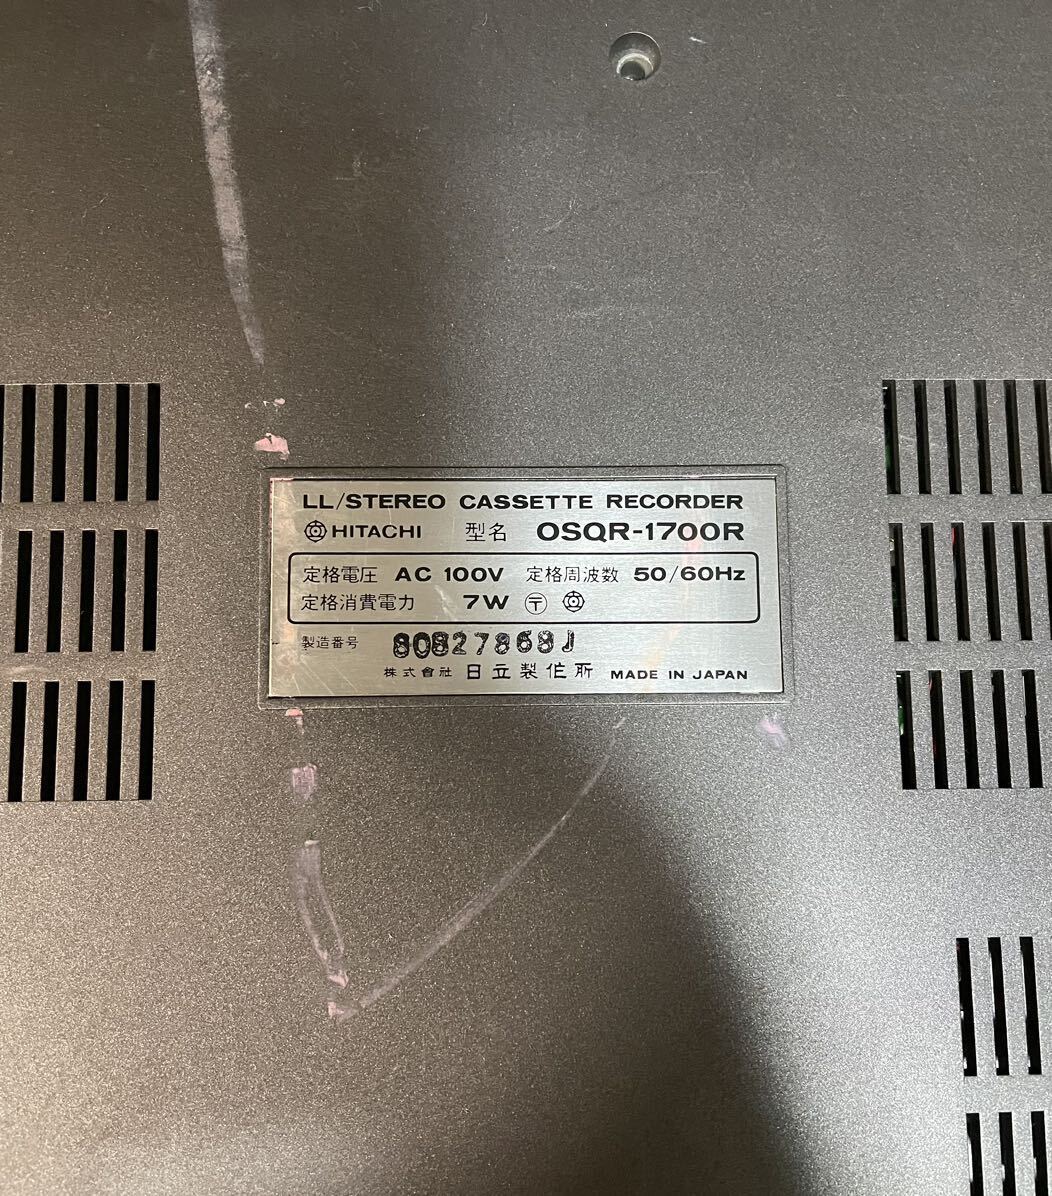 HITACHI / Hitachi OSQR-1700R cassette tape recorder Showa Retro electrification verification cassette deck Showa Retro 